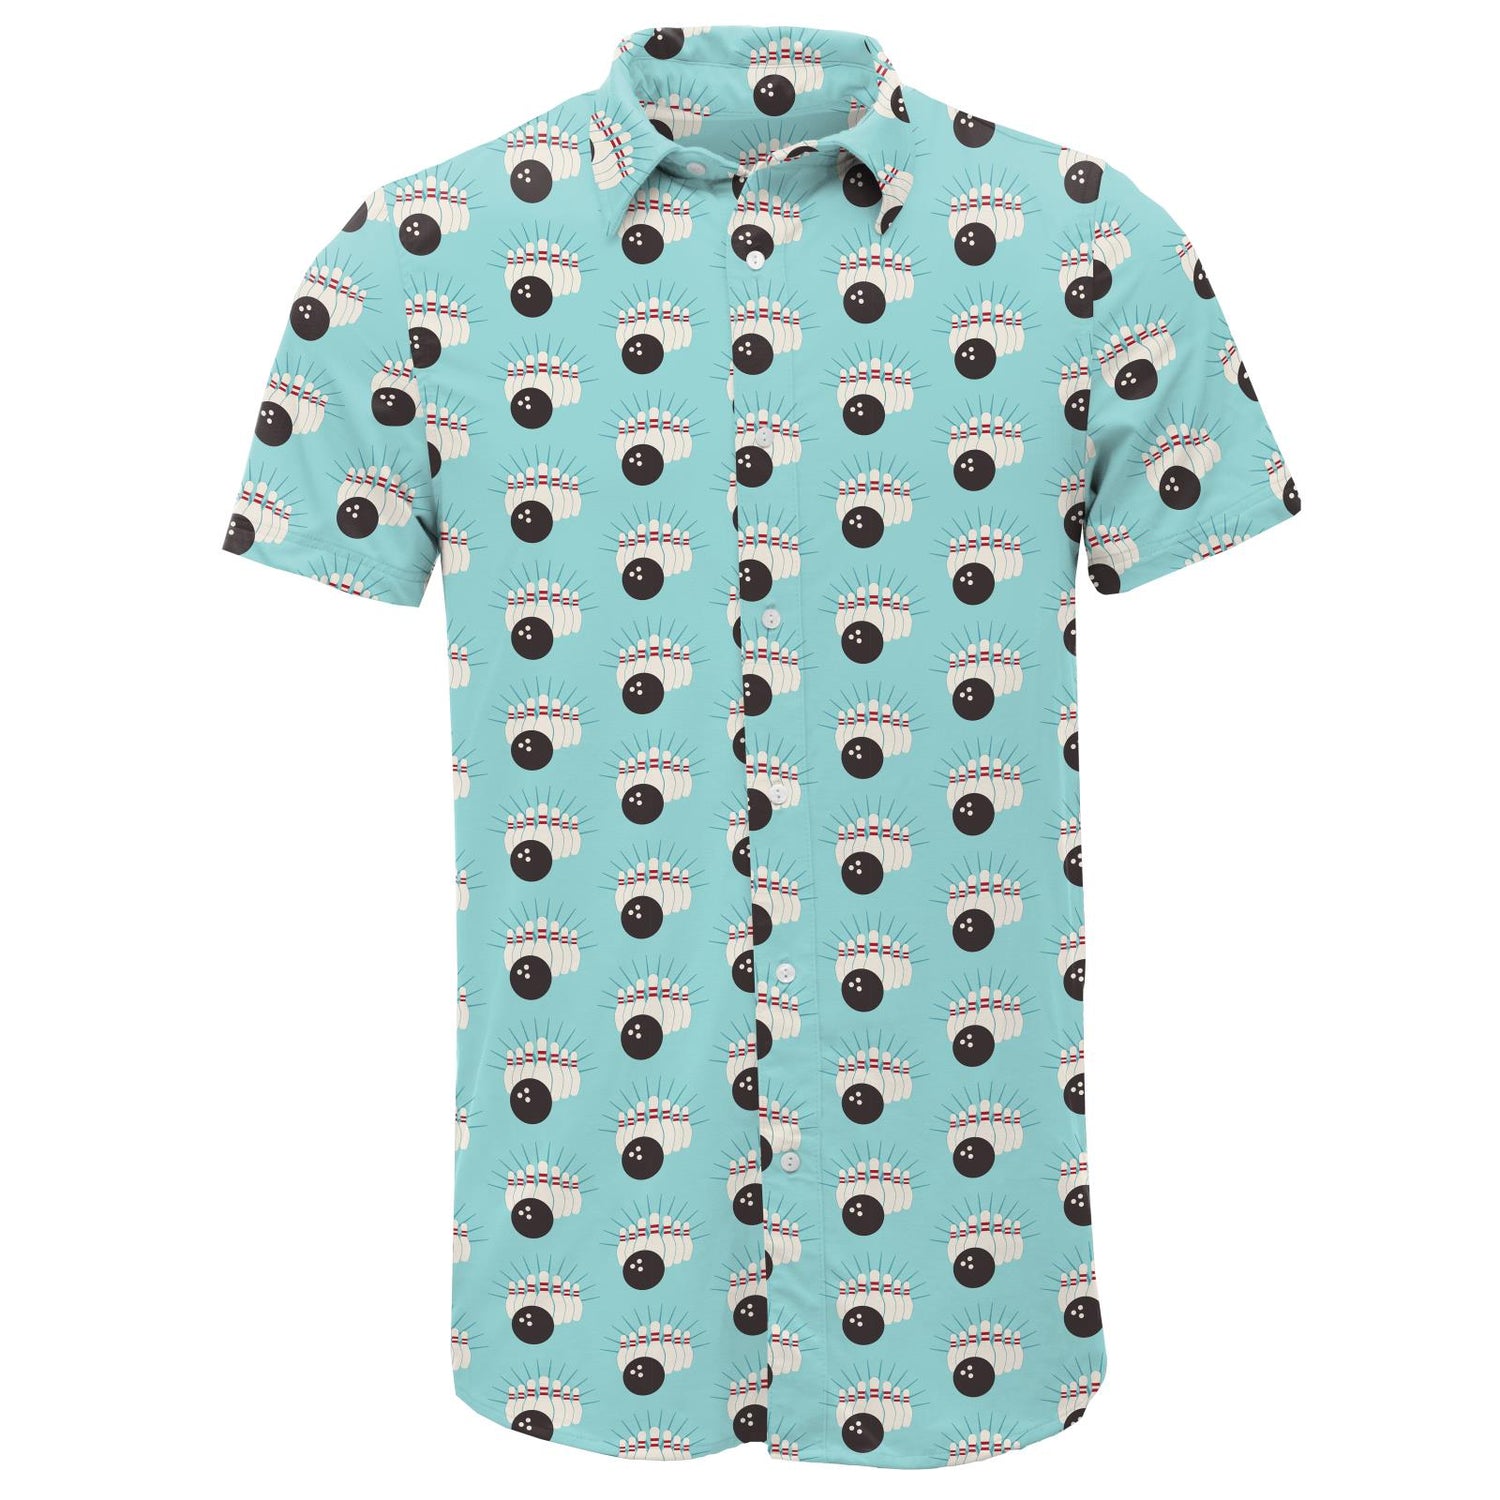 Men's Print Short Sleeve Button Down Shirt in Summer Sky Bowling